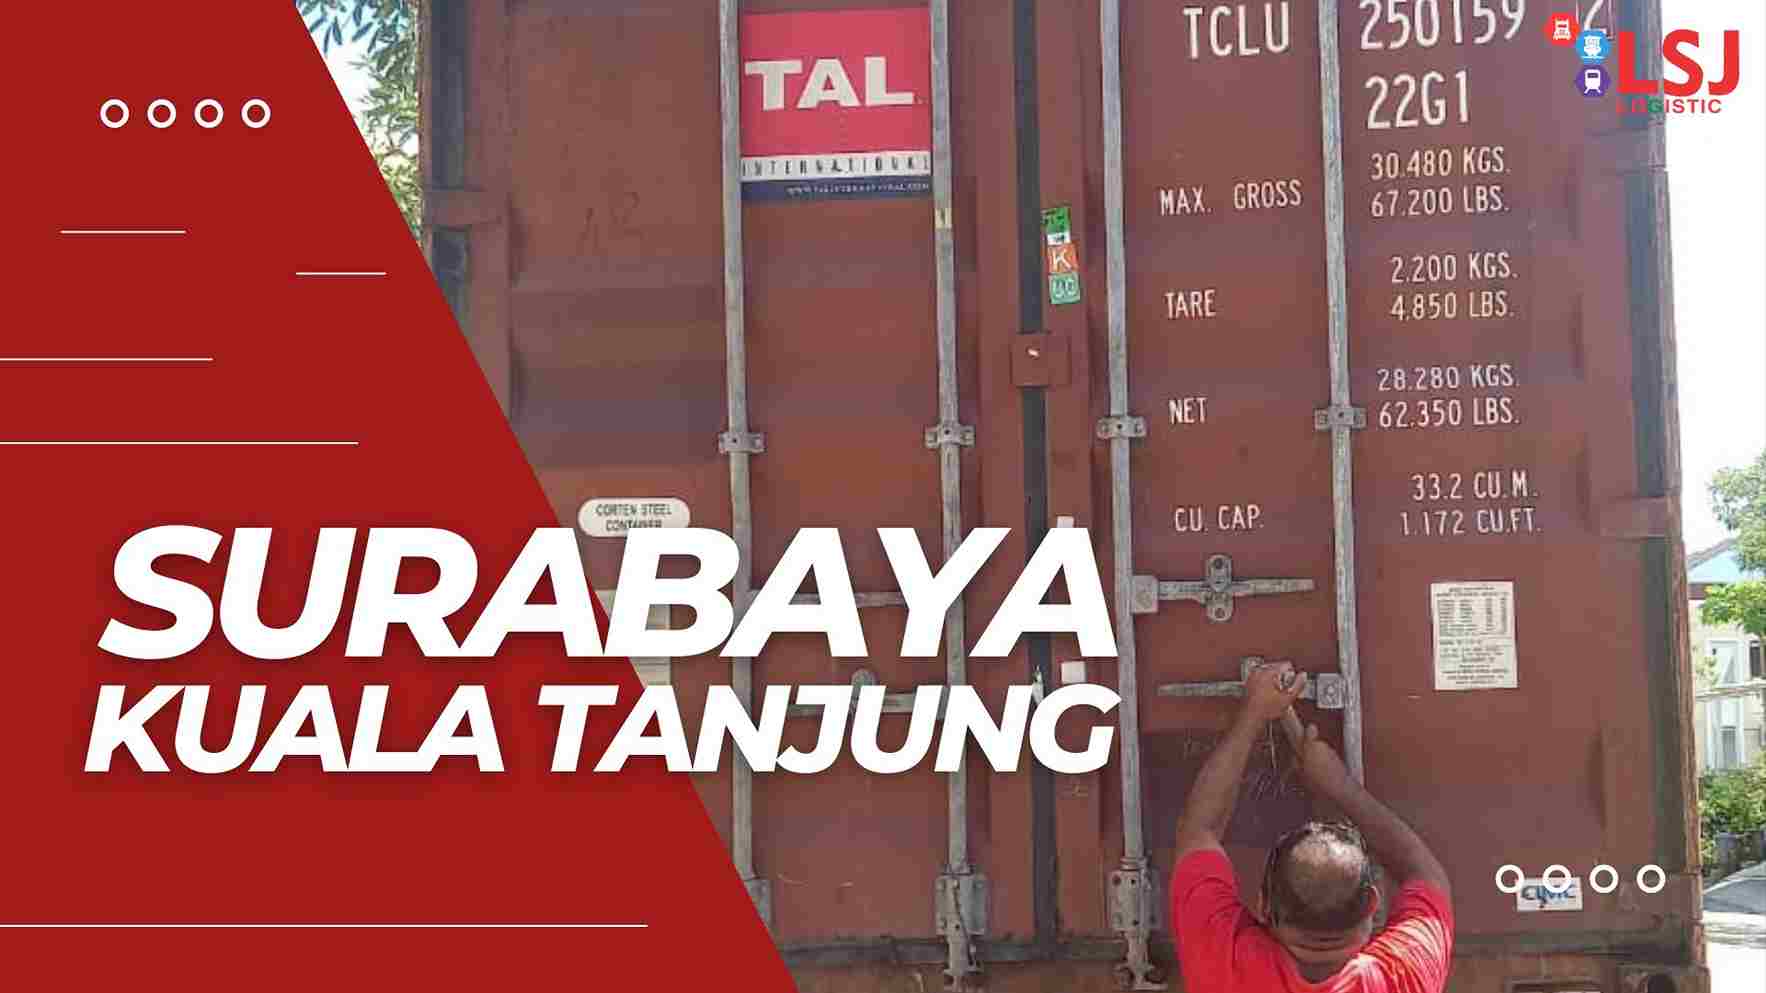 Cargo Container Surabaya Kuala Tanjung